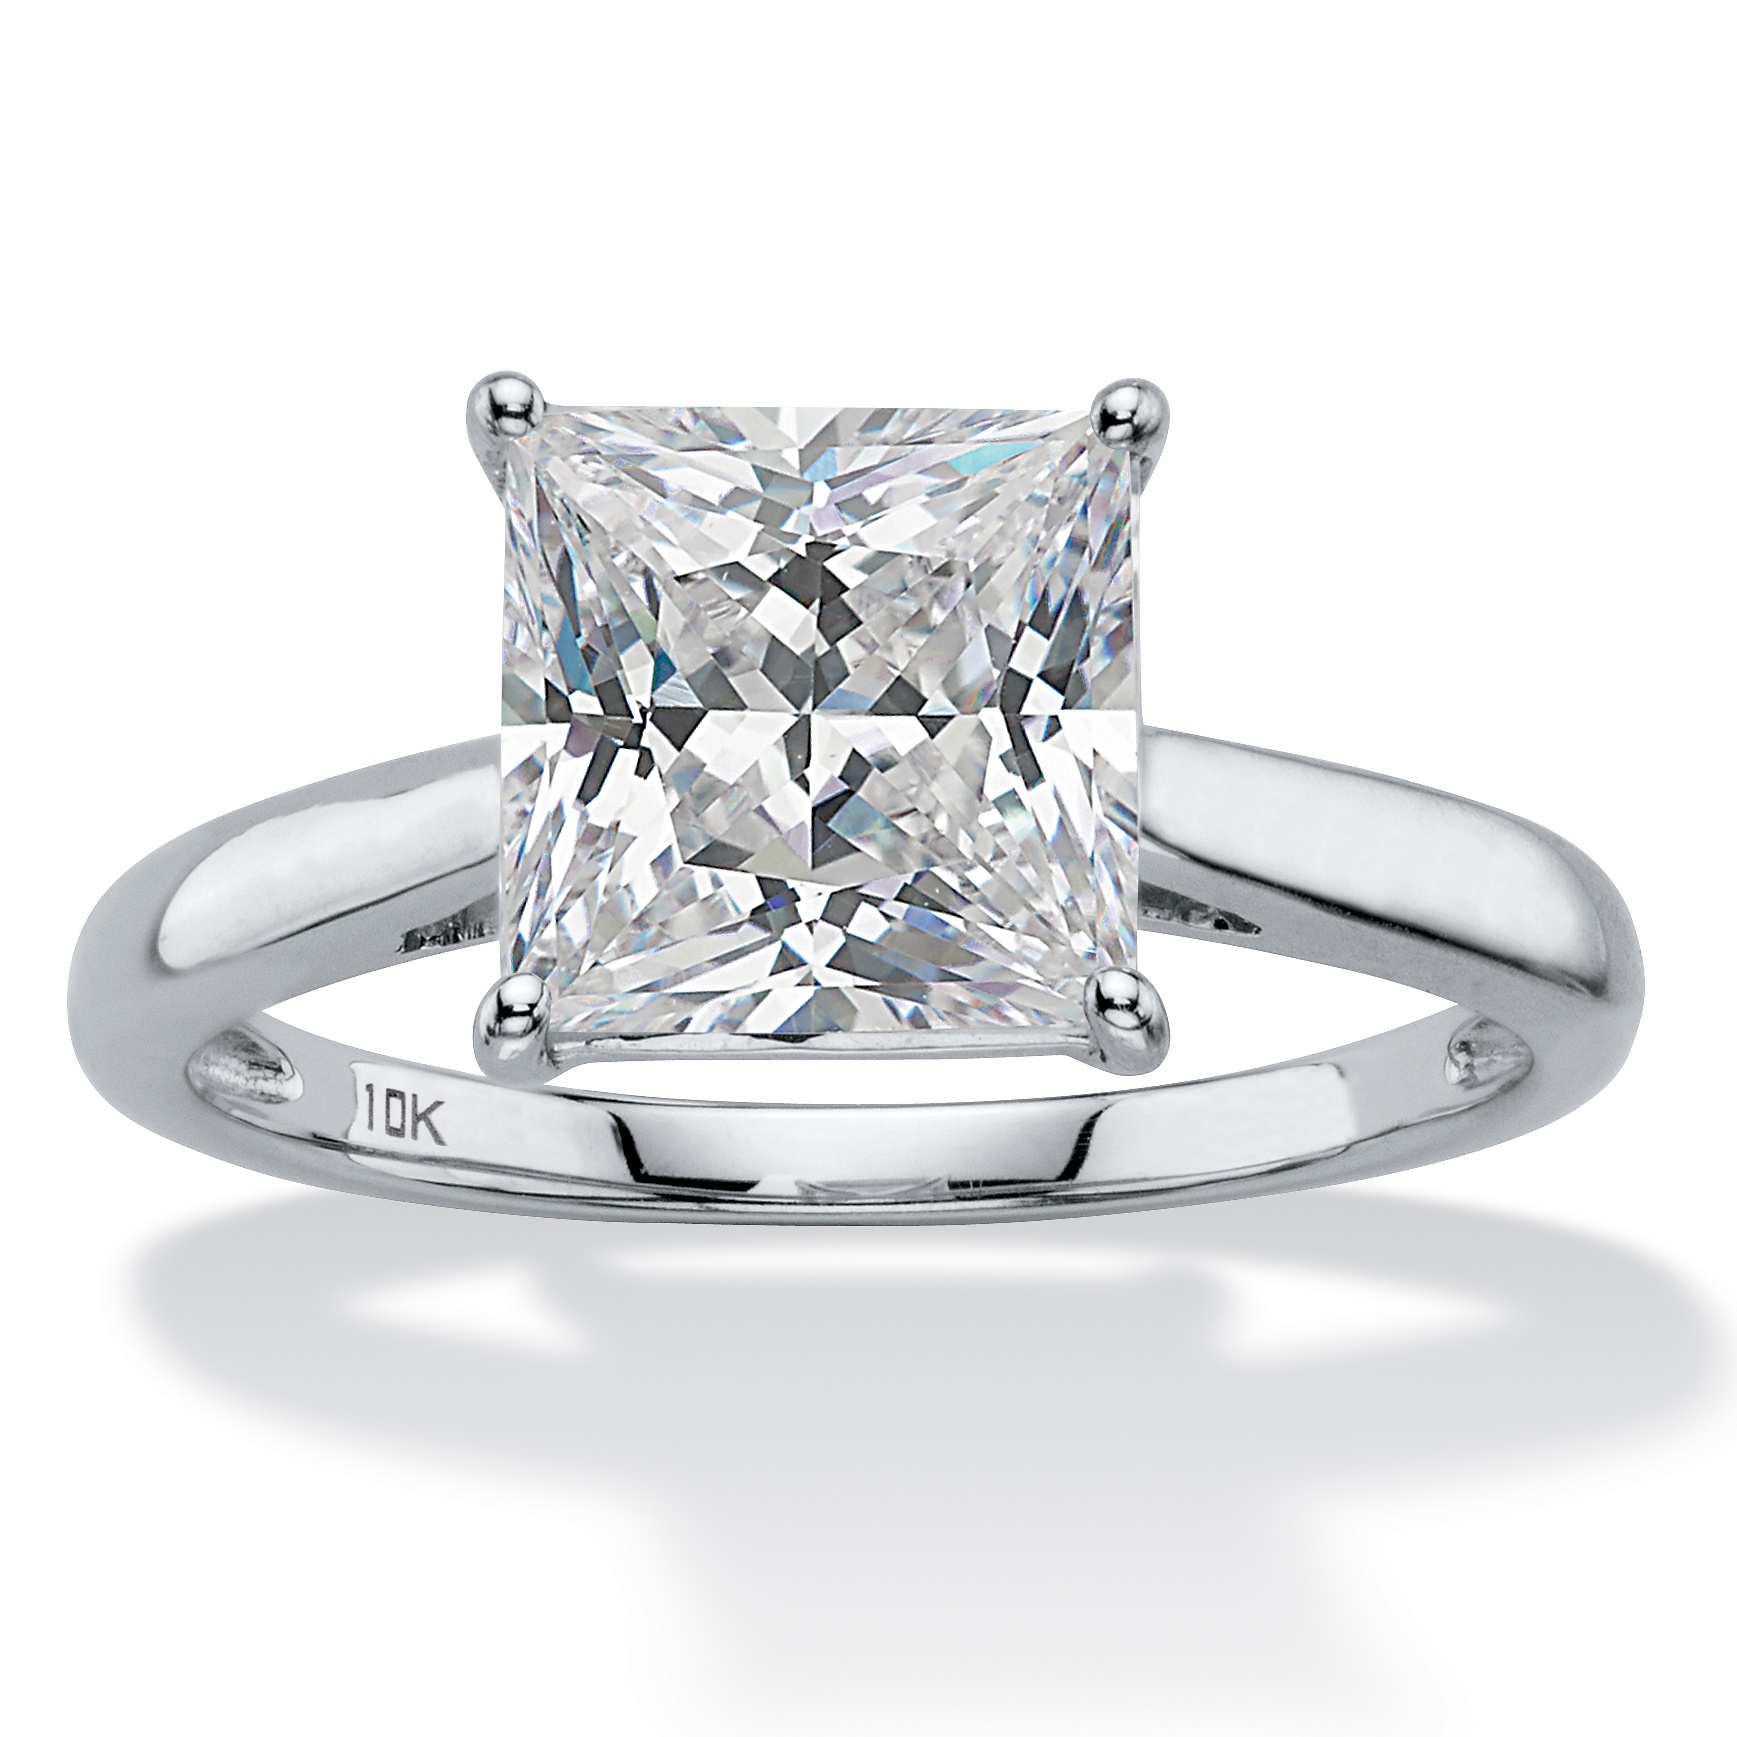 10K White Gold Cz Wedding Ring Sets - designsbylima